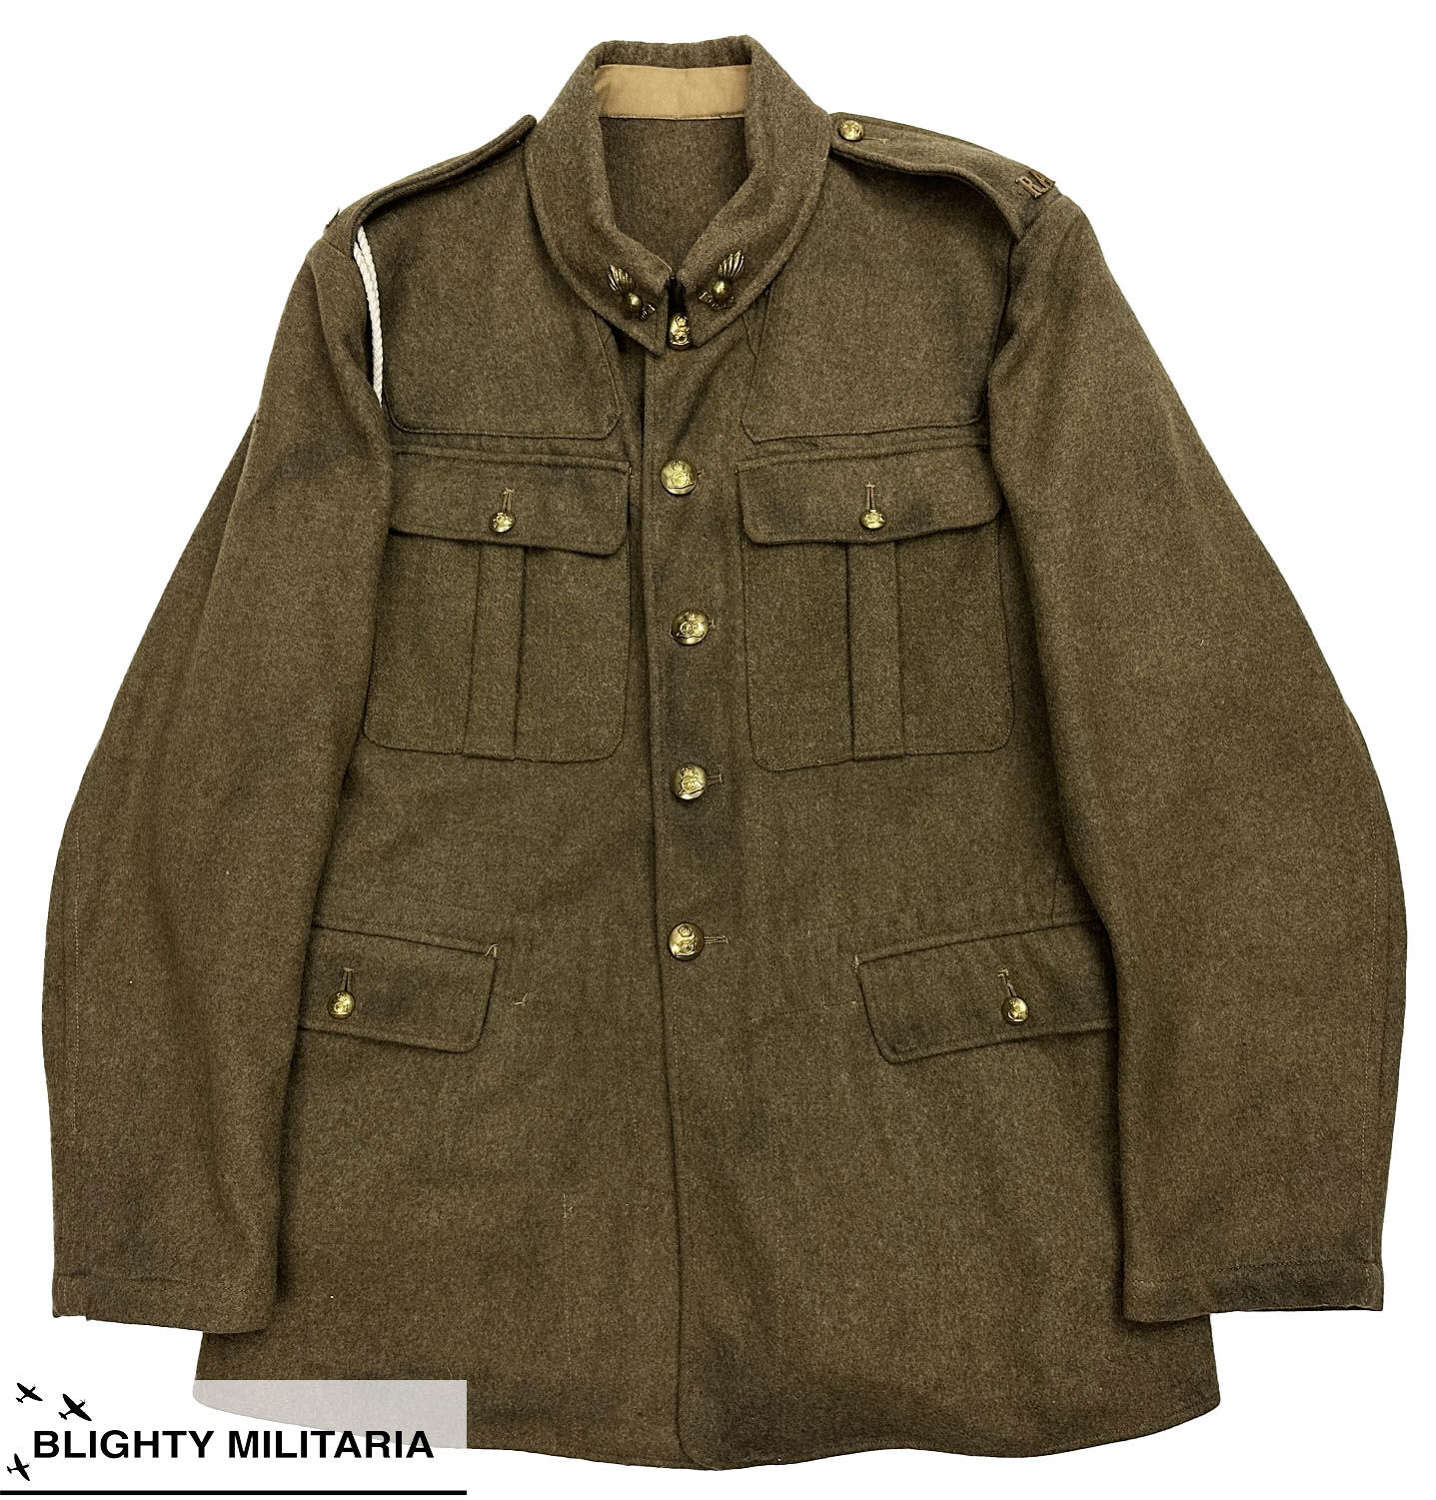 Original 1942 Dated British Army Service Dress Tunic - Large size 15